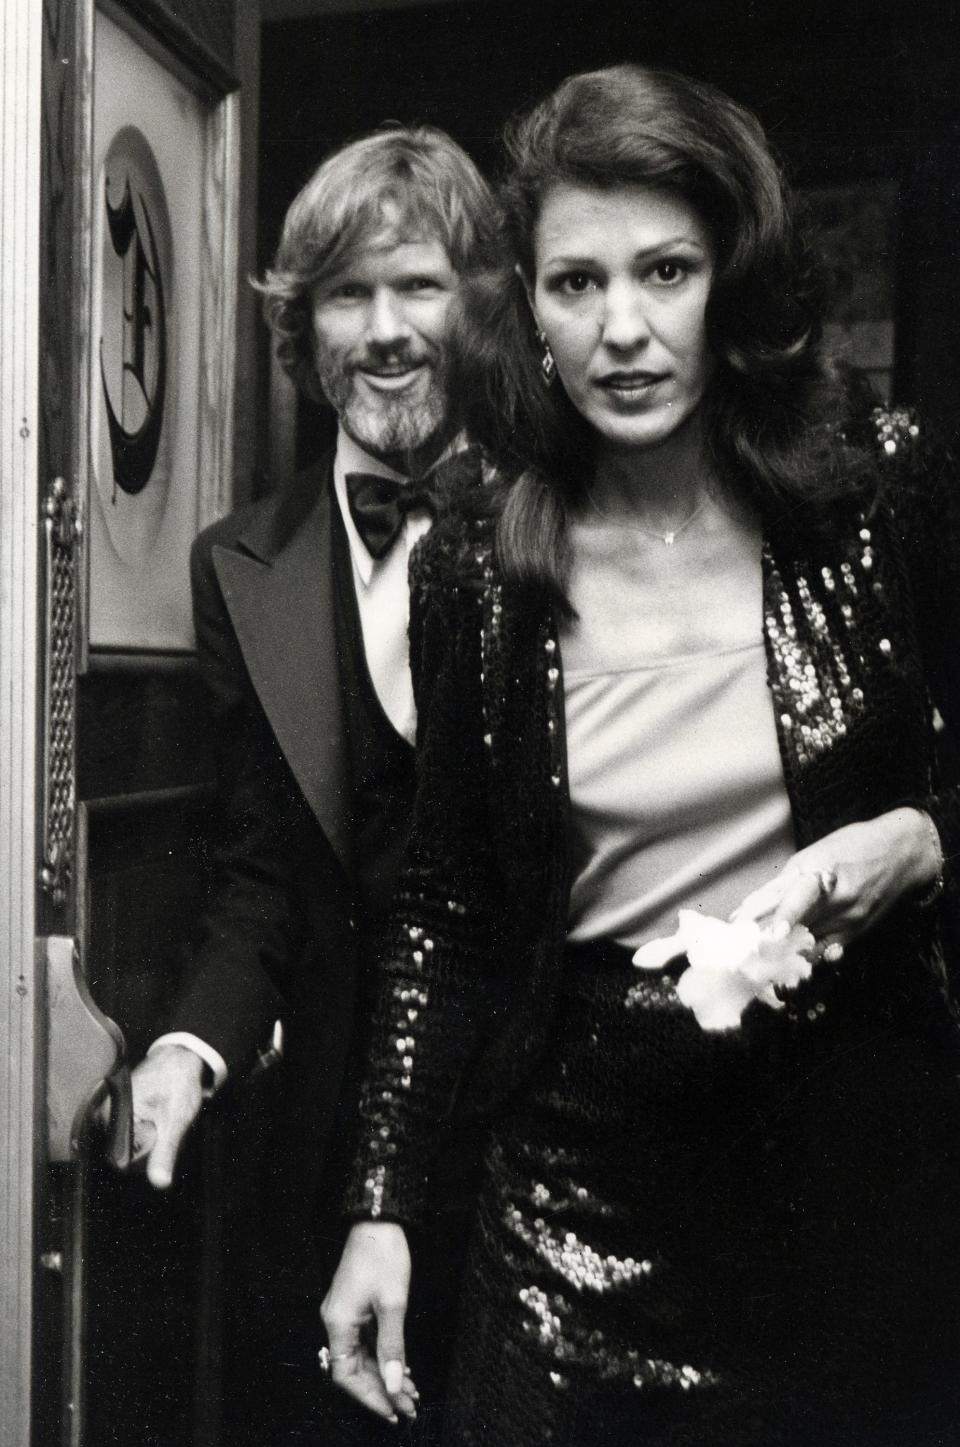 1979: Kris Kristofferson and Rita Coolidge